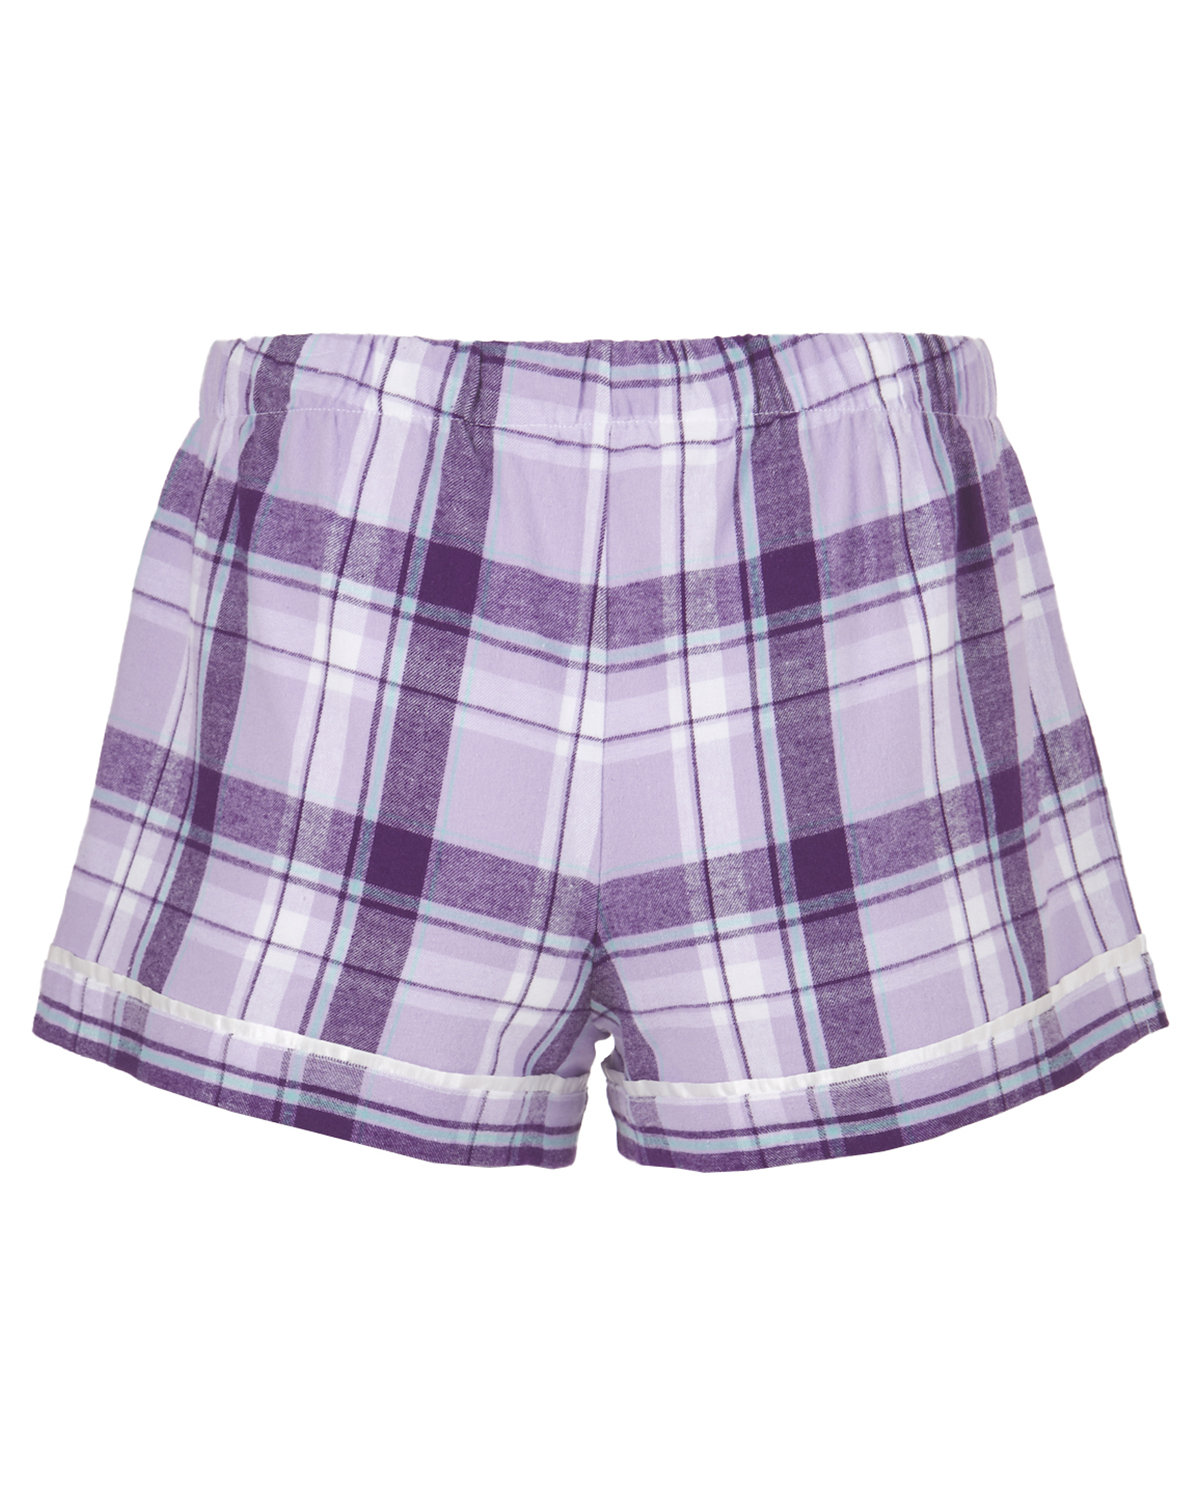 Boxercraft BW6501 - Women's Flannel Shorts